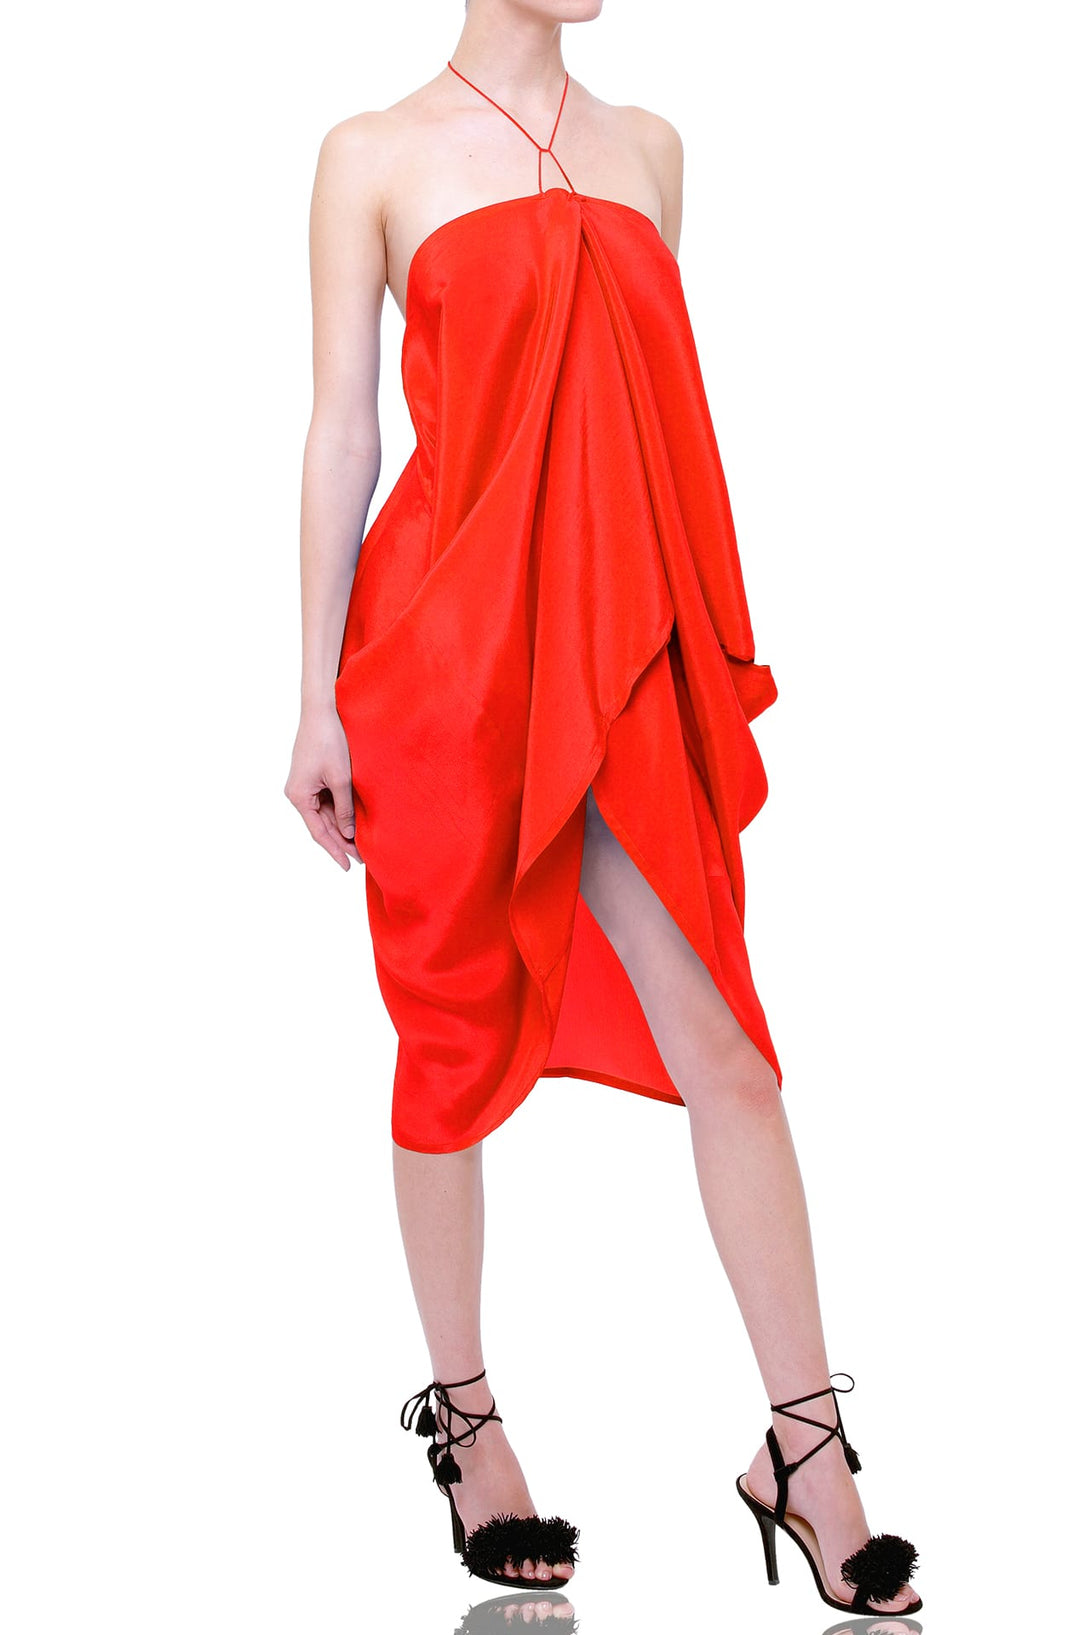  red formal dress short, Shahida Parides, silk caftans,short sleeveless summer dresses, cute mini dresses,